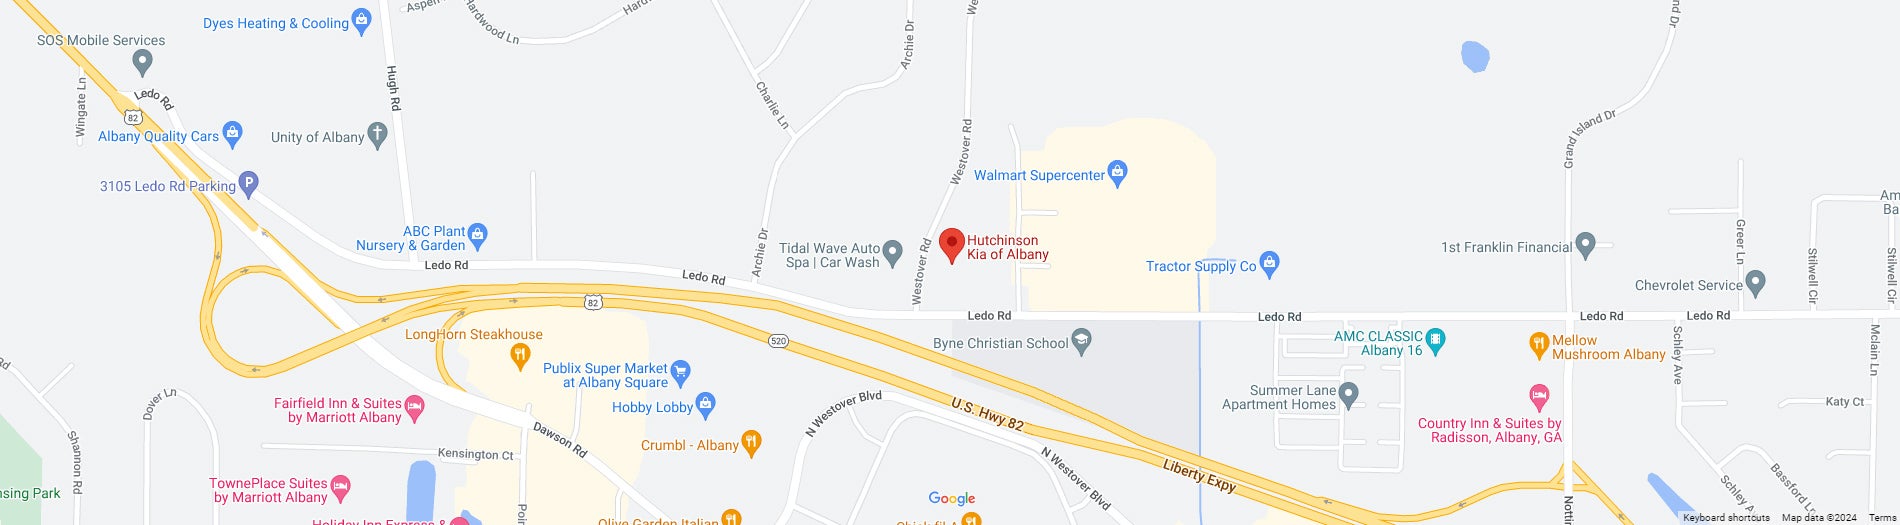 Hutchinson Kia of Albany Google Map image